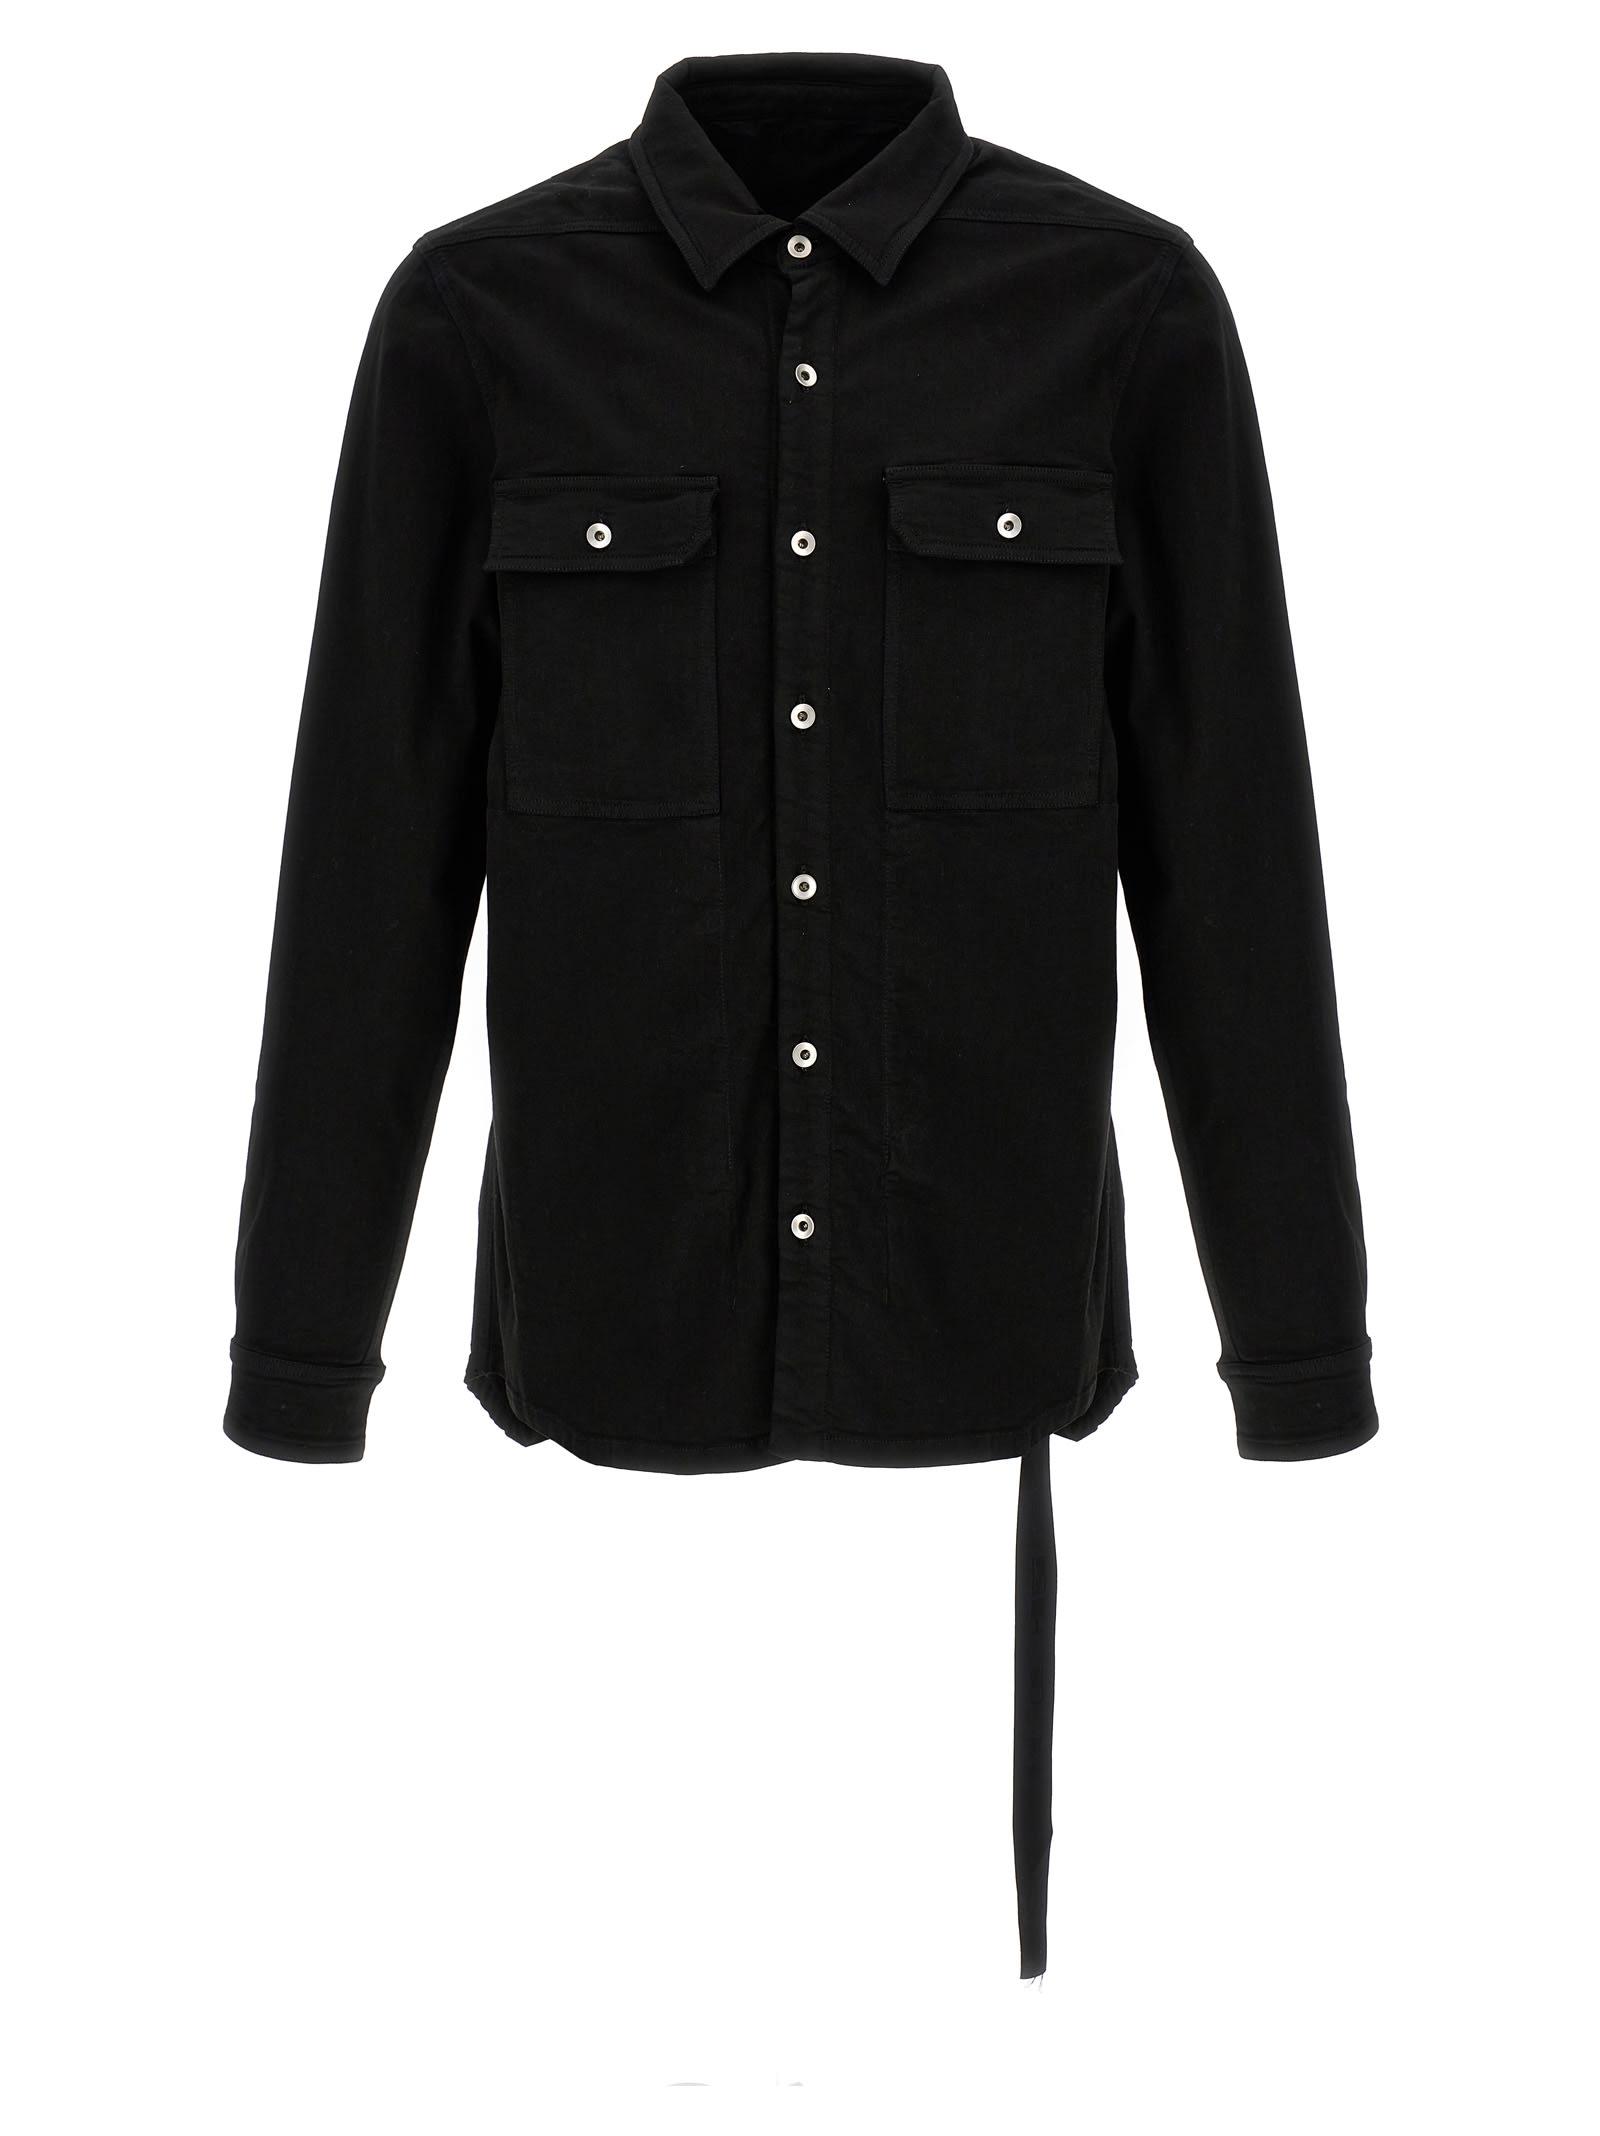 Rick Owens DRKSHDW Outershirt Jacket in Black for Men | Lyst